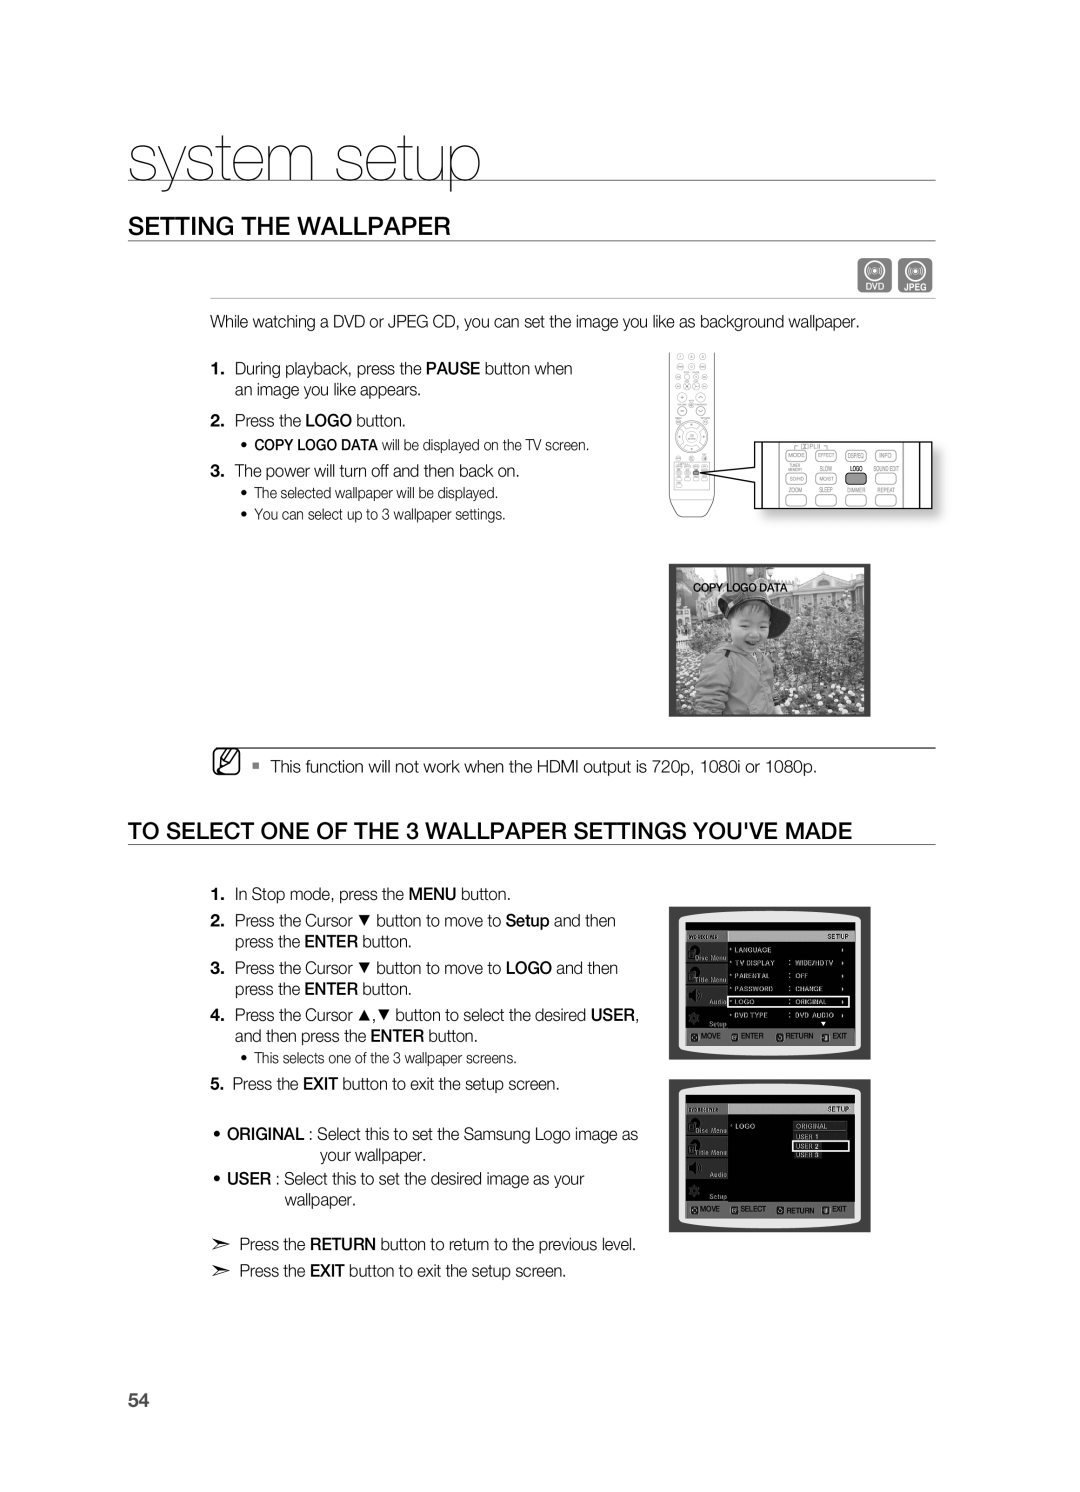 Samsung HT-TWZ315 manual SEttinG tHE WALLPAPEr, system setup 